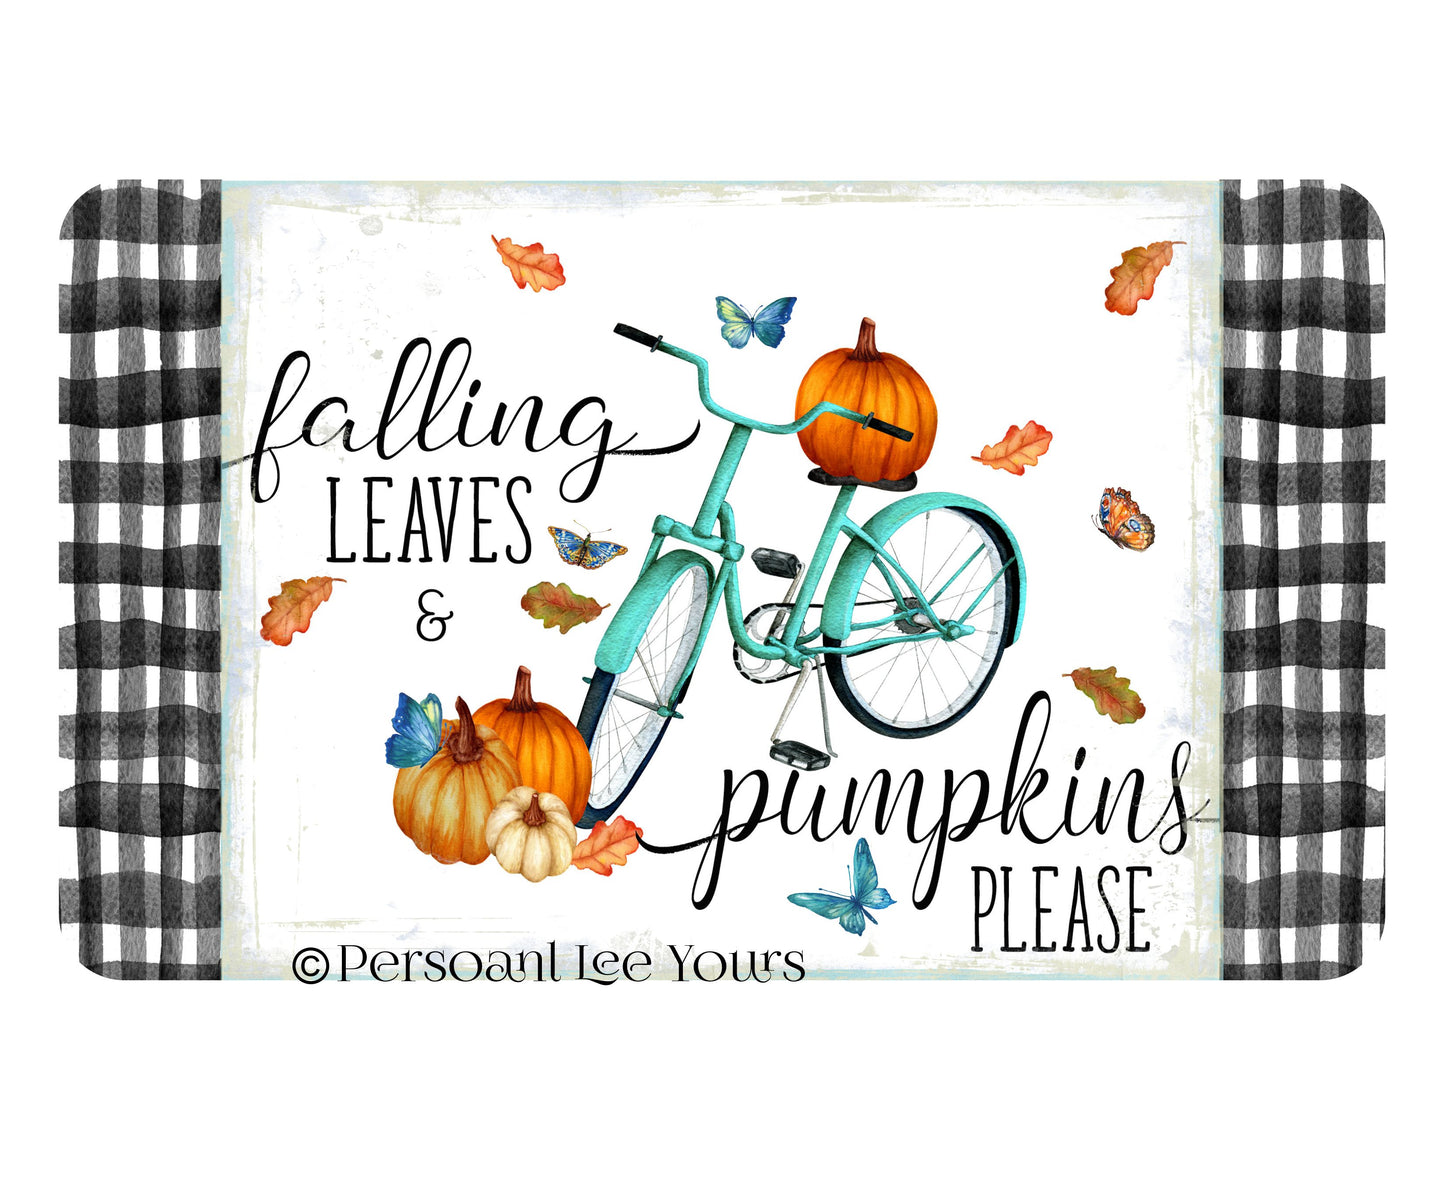 Fall Wreath Sign * Falling Leaves & Pumpkins Please * 3 Sizes * Lightweight Metal